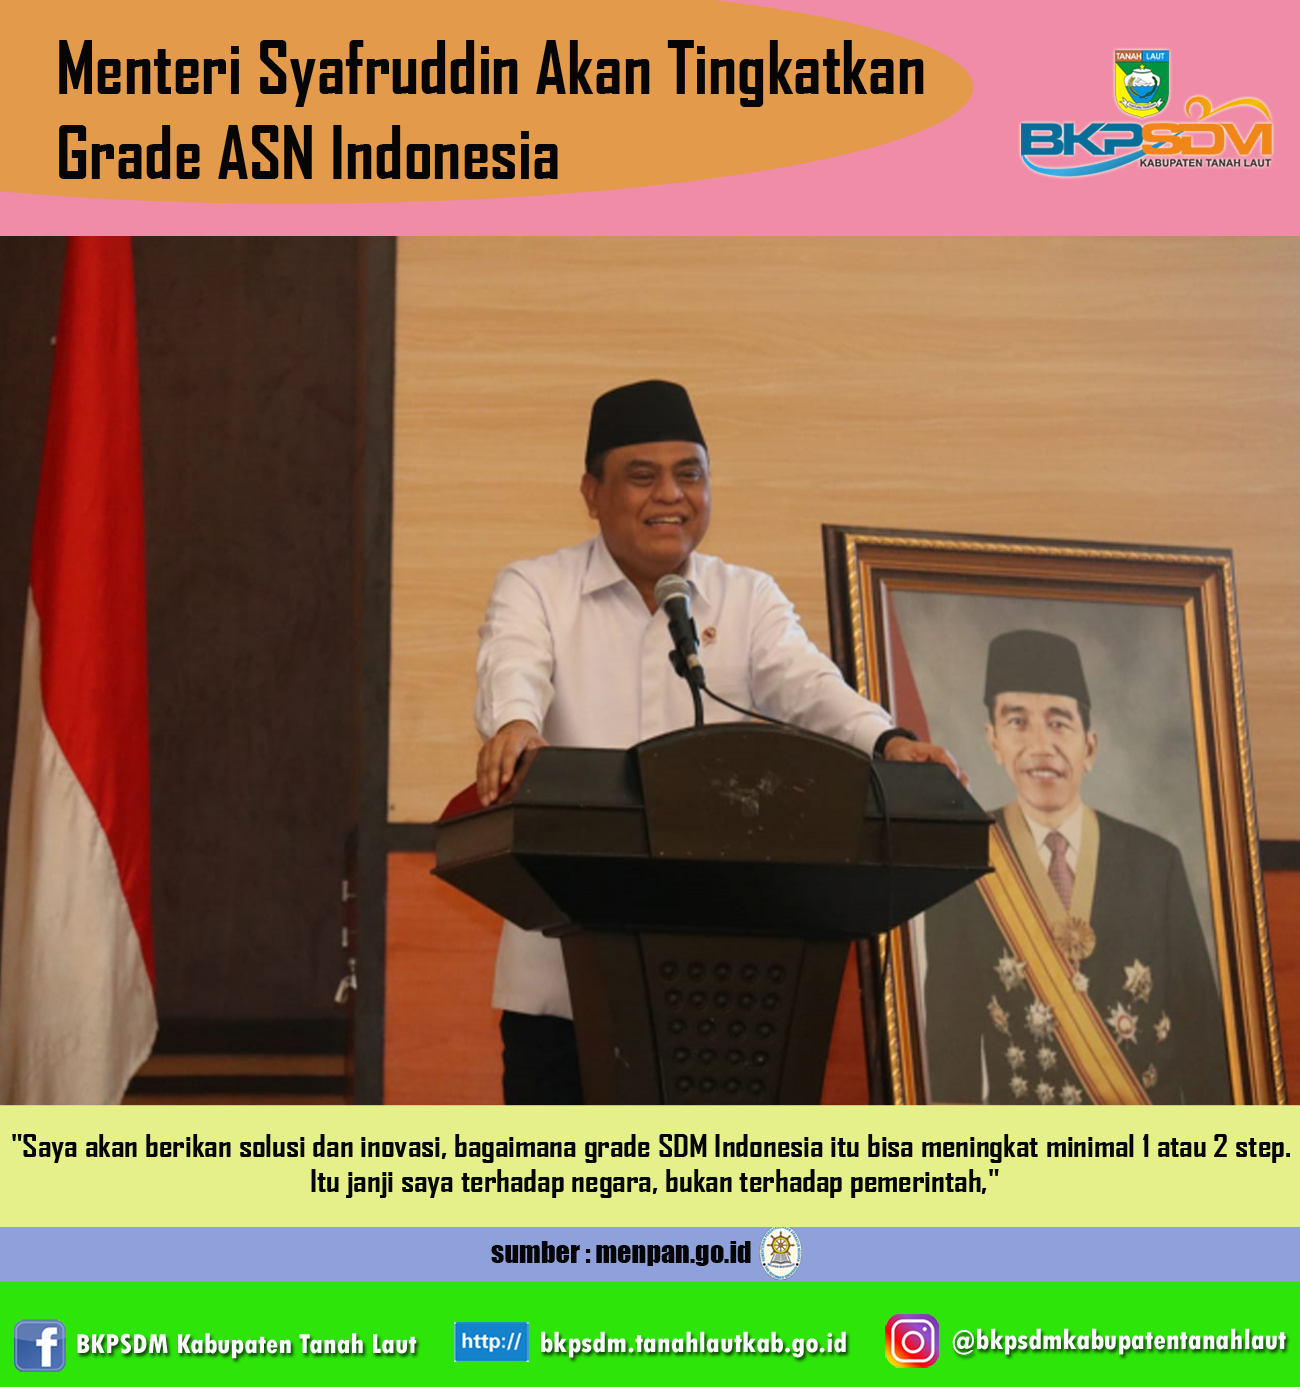 Menteri Syafruddin Akan Tingkatkan Grade ASN Indonesia